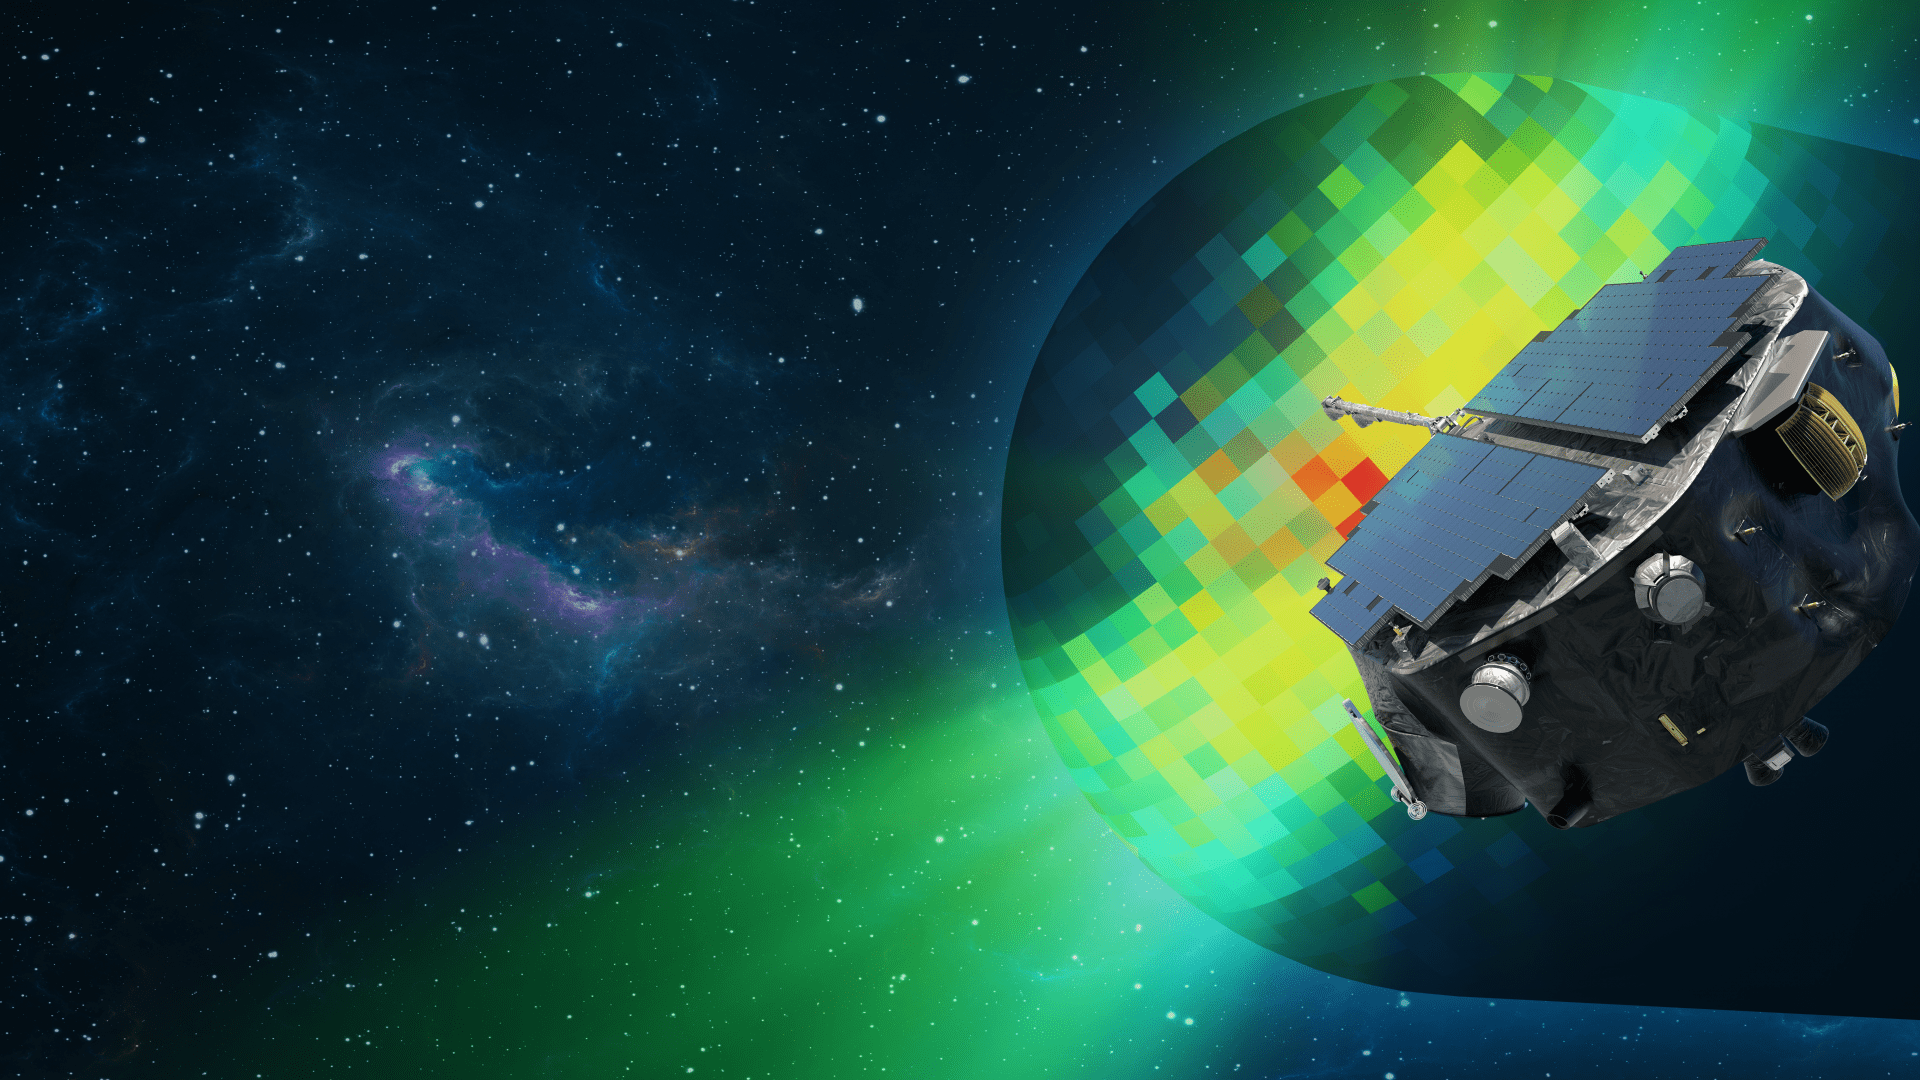 IMAP spacecraft artist's concept